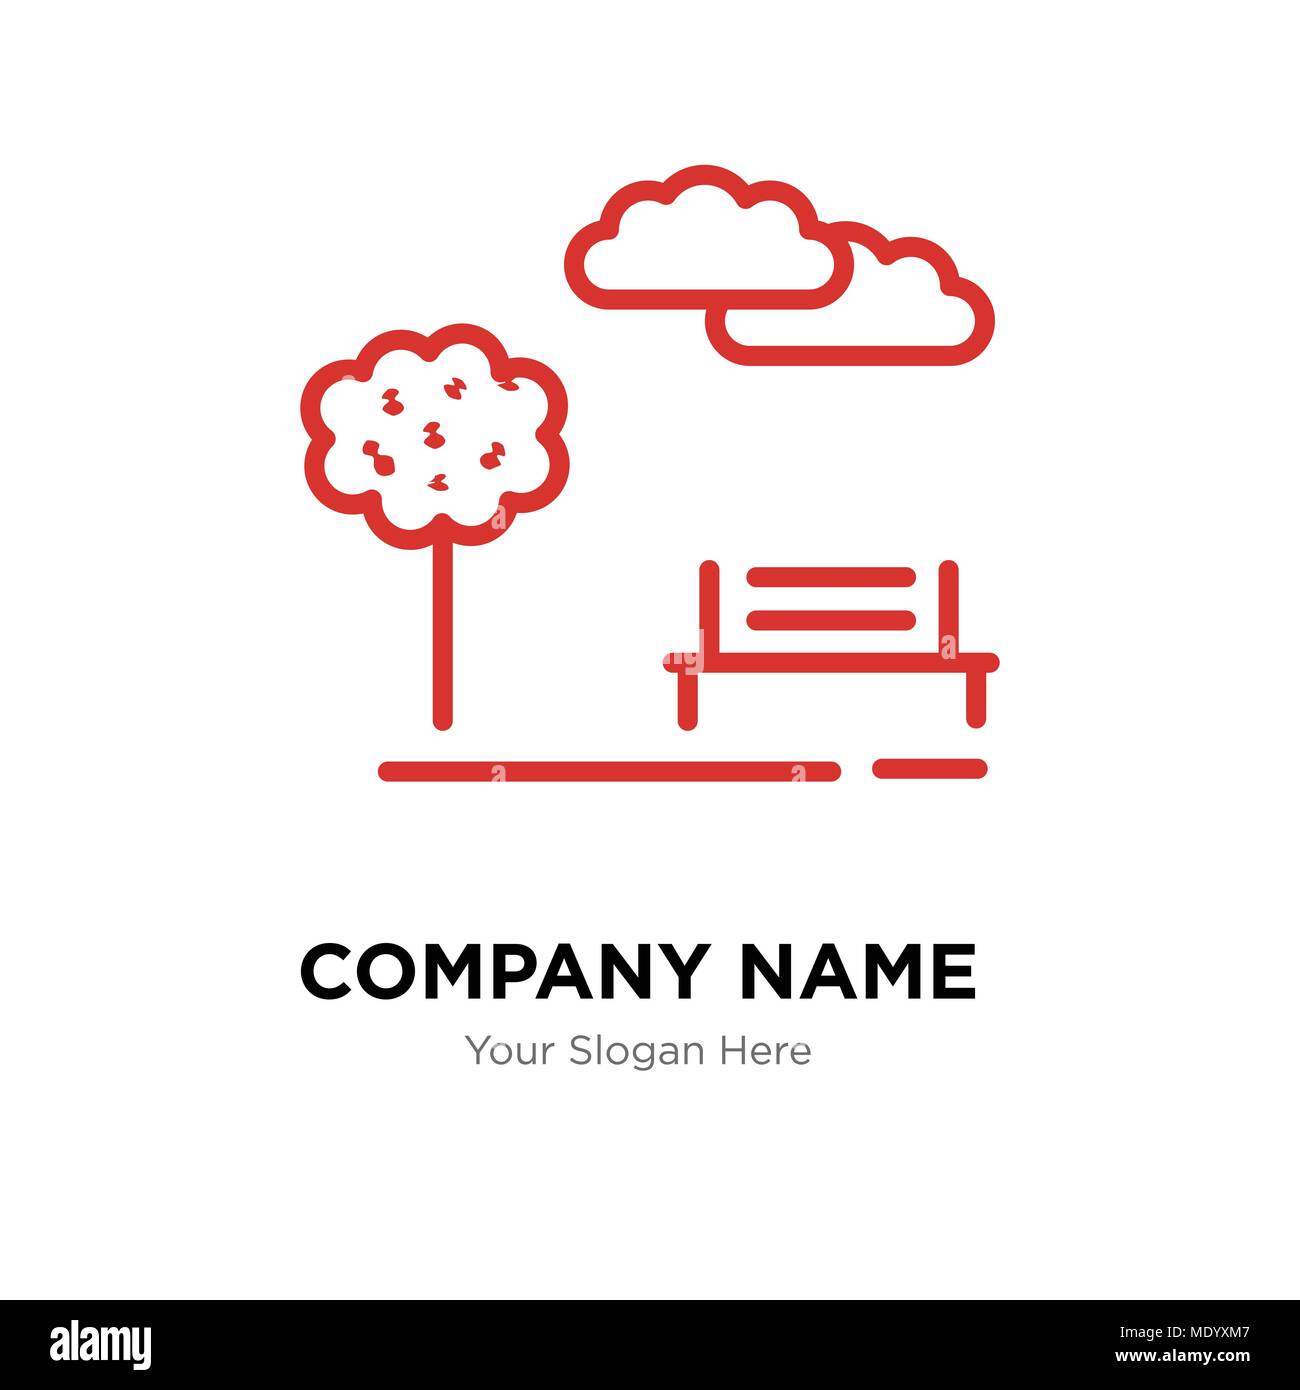 Park company logo design template, Business corporate vector icon Stock Vector